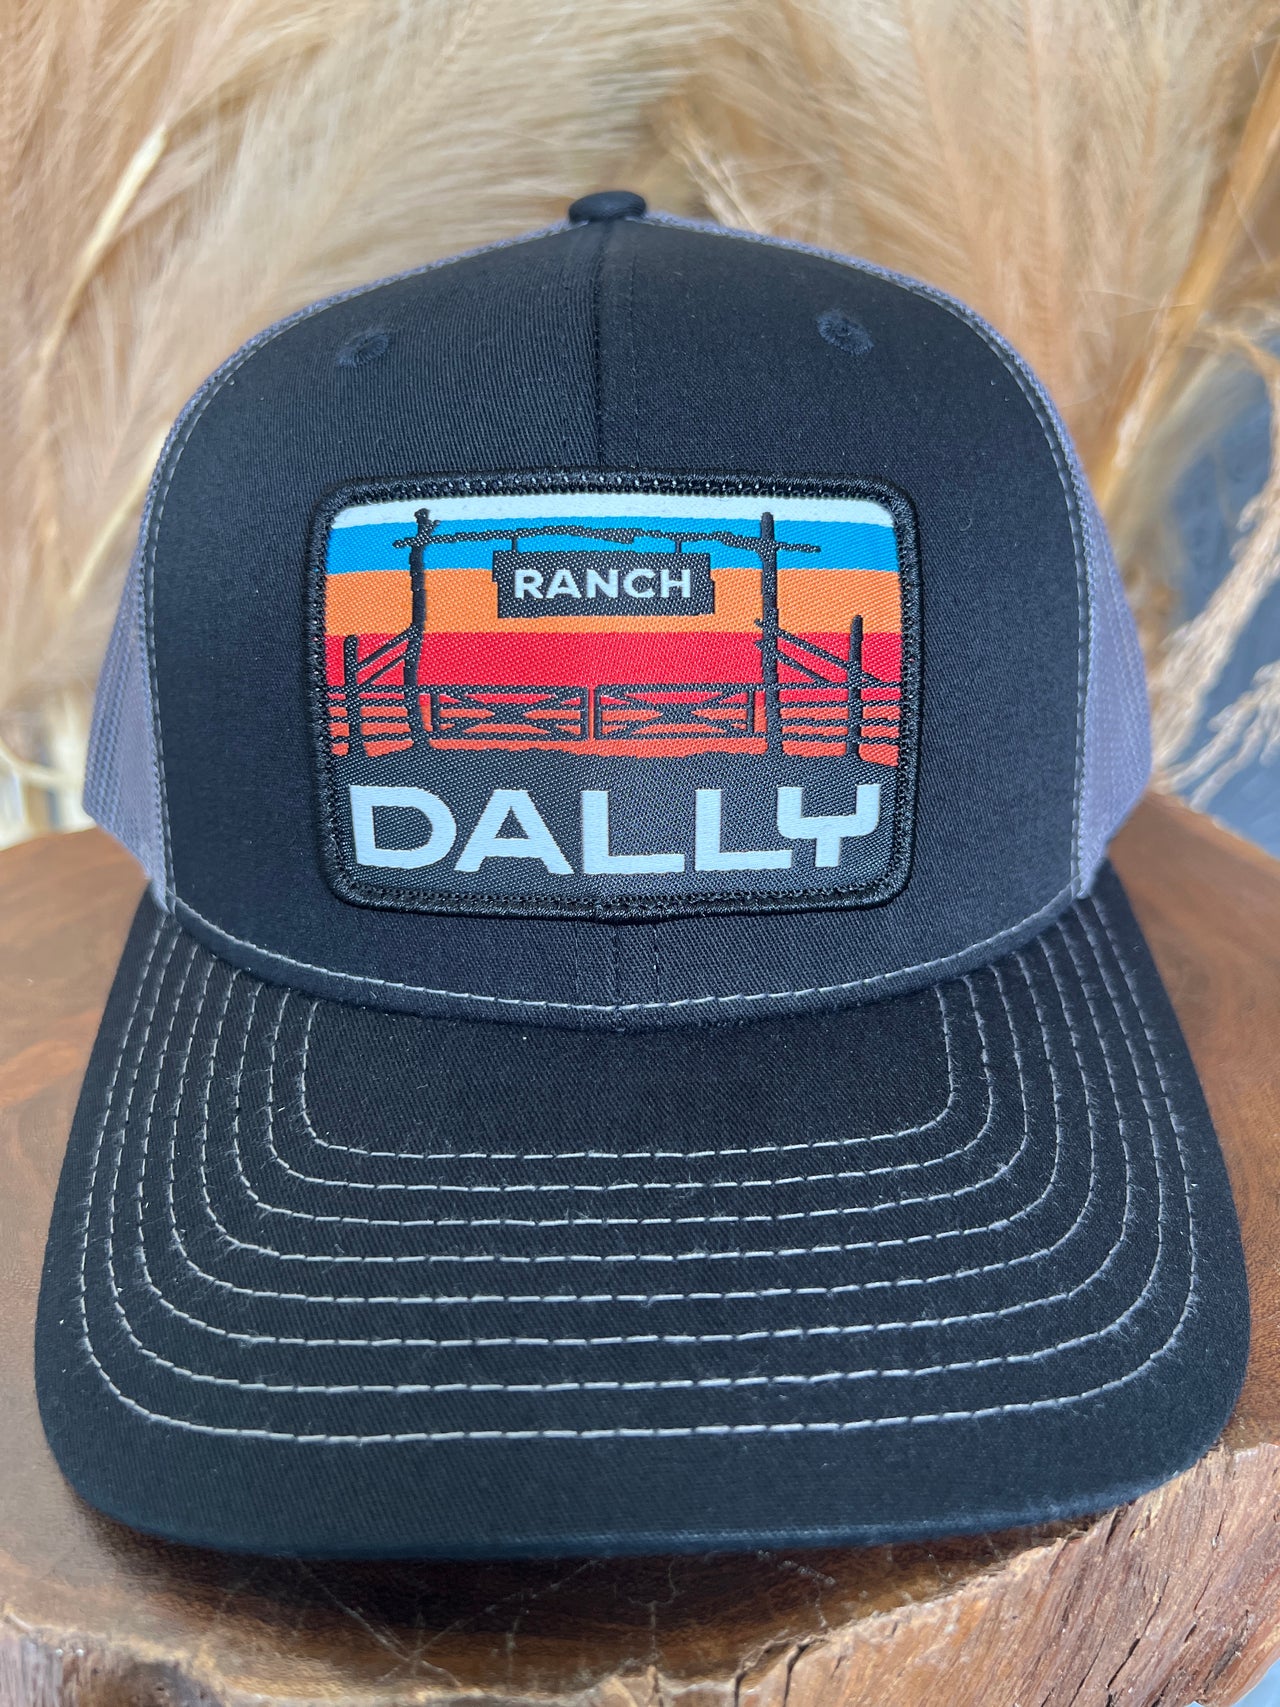 Dally Ranch Sunset Hat- Black/Grey